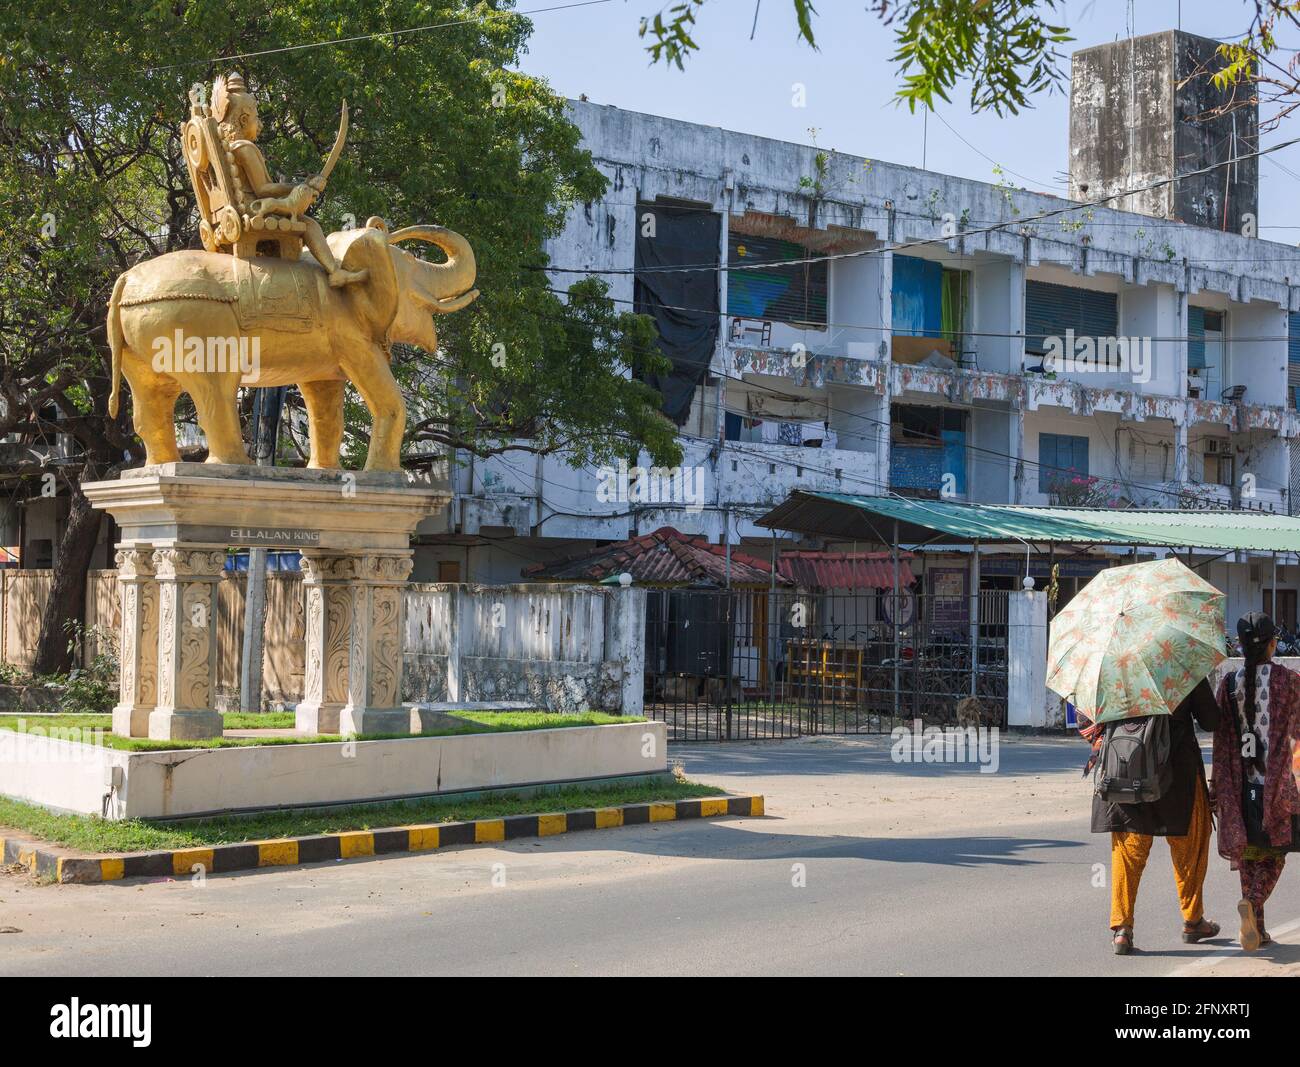 Sri Lankan pedestrians pass one of Shirparsariyar Chidamabarampillai's golden tamil king statues created in 2014, Jaffna, Northern Province, Sri Lanka Stock Photo